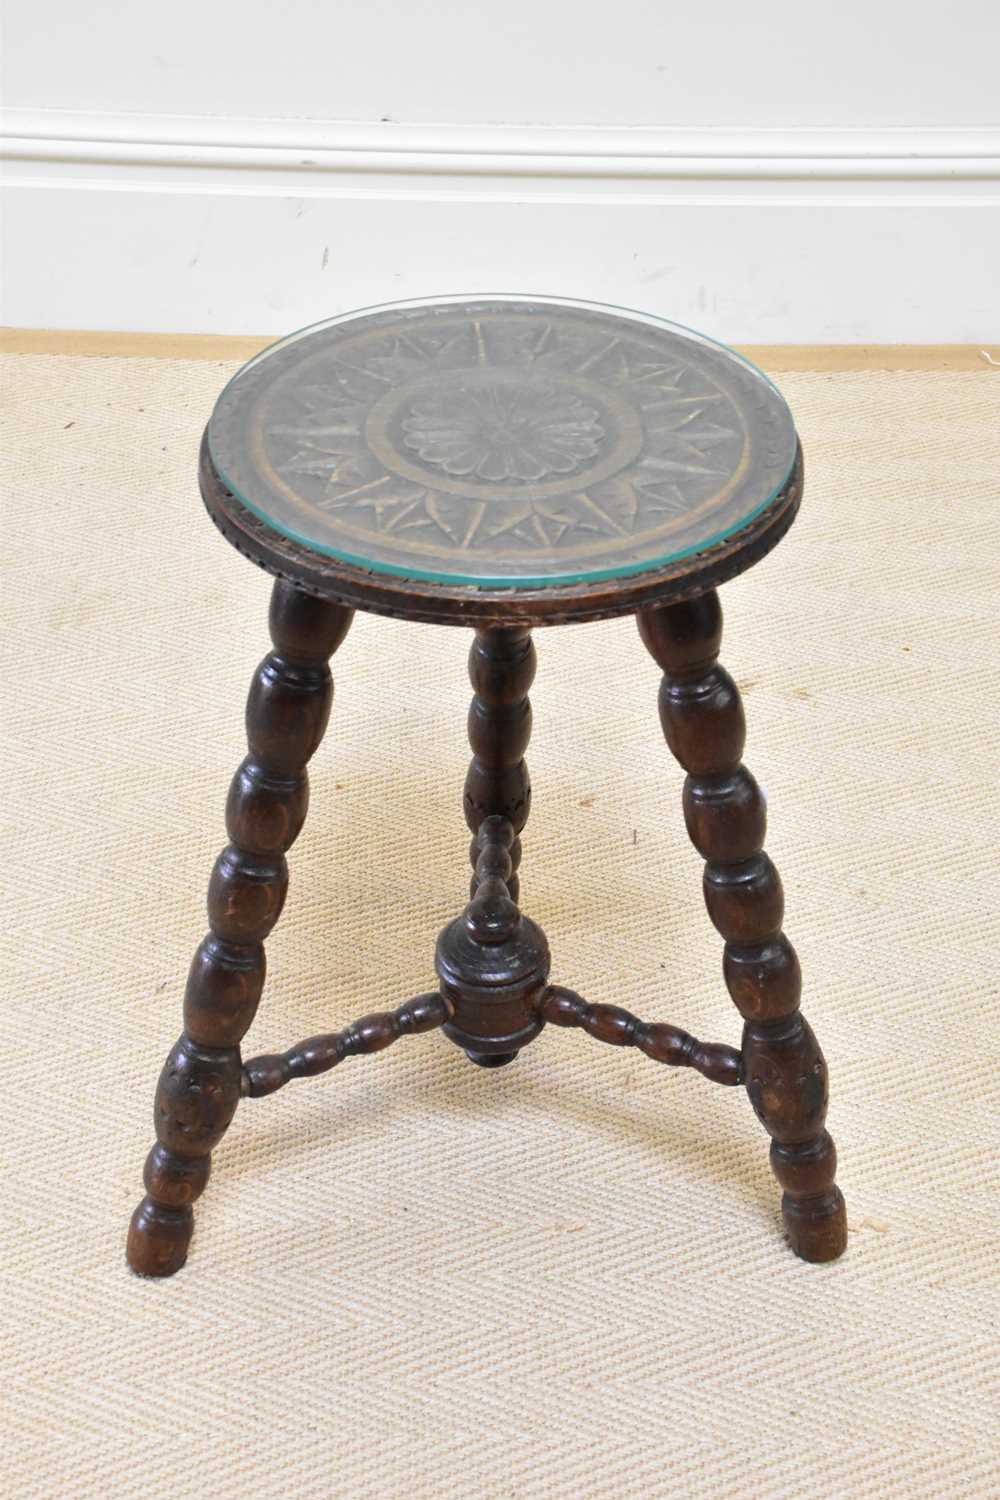 A 19th century carved oak stool, height 50cm, diameter 31cm.